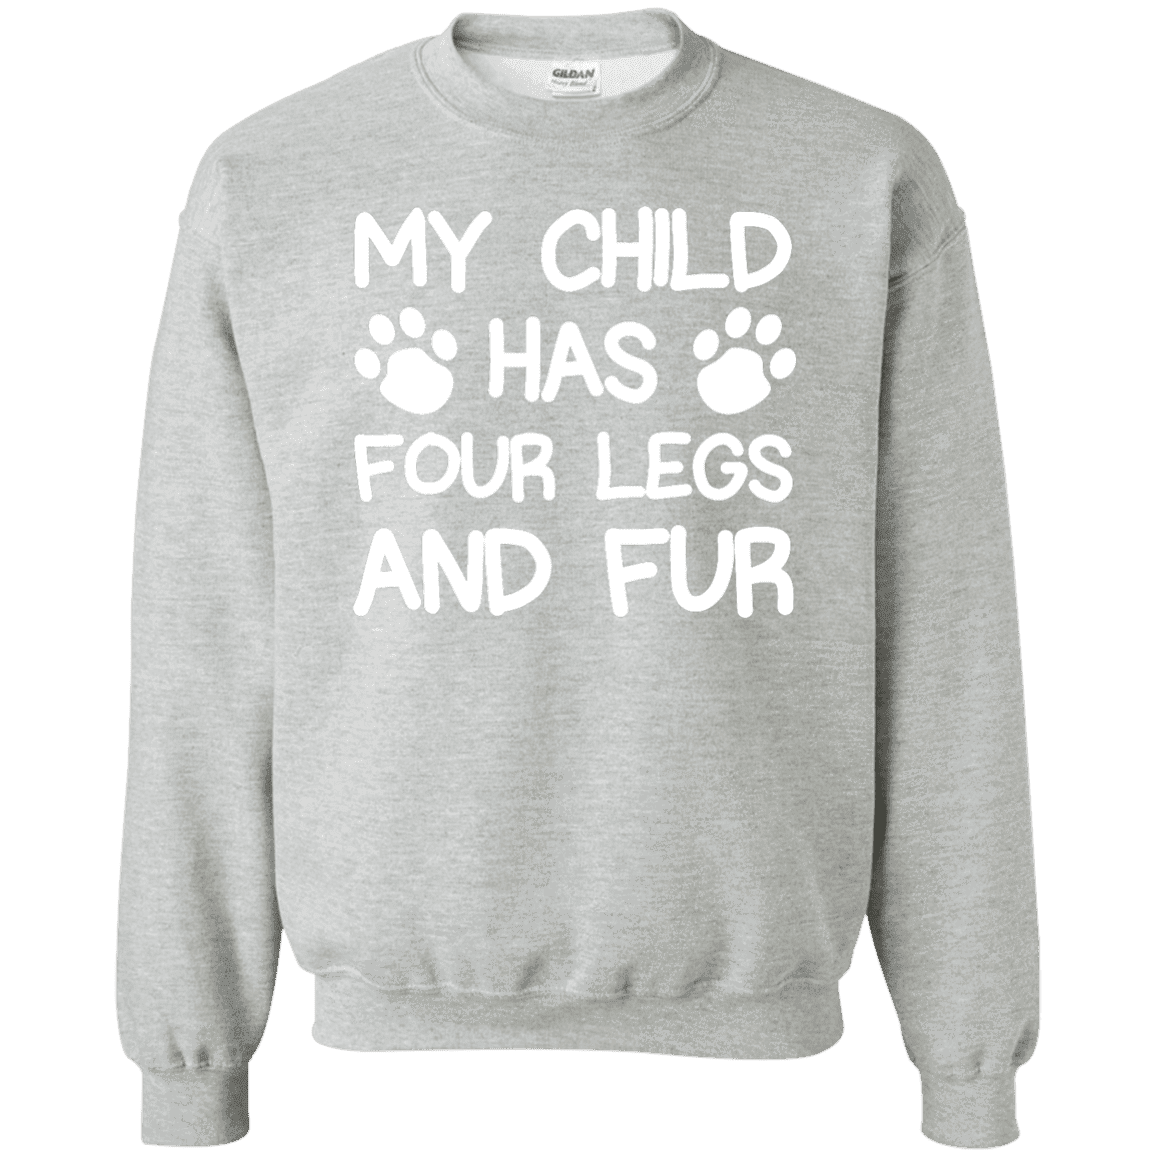 Four Legs And Fur - Sweatshirt.